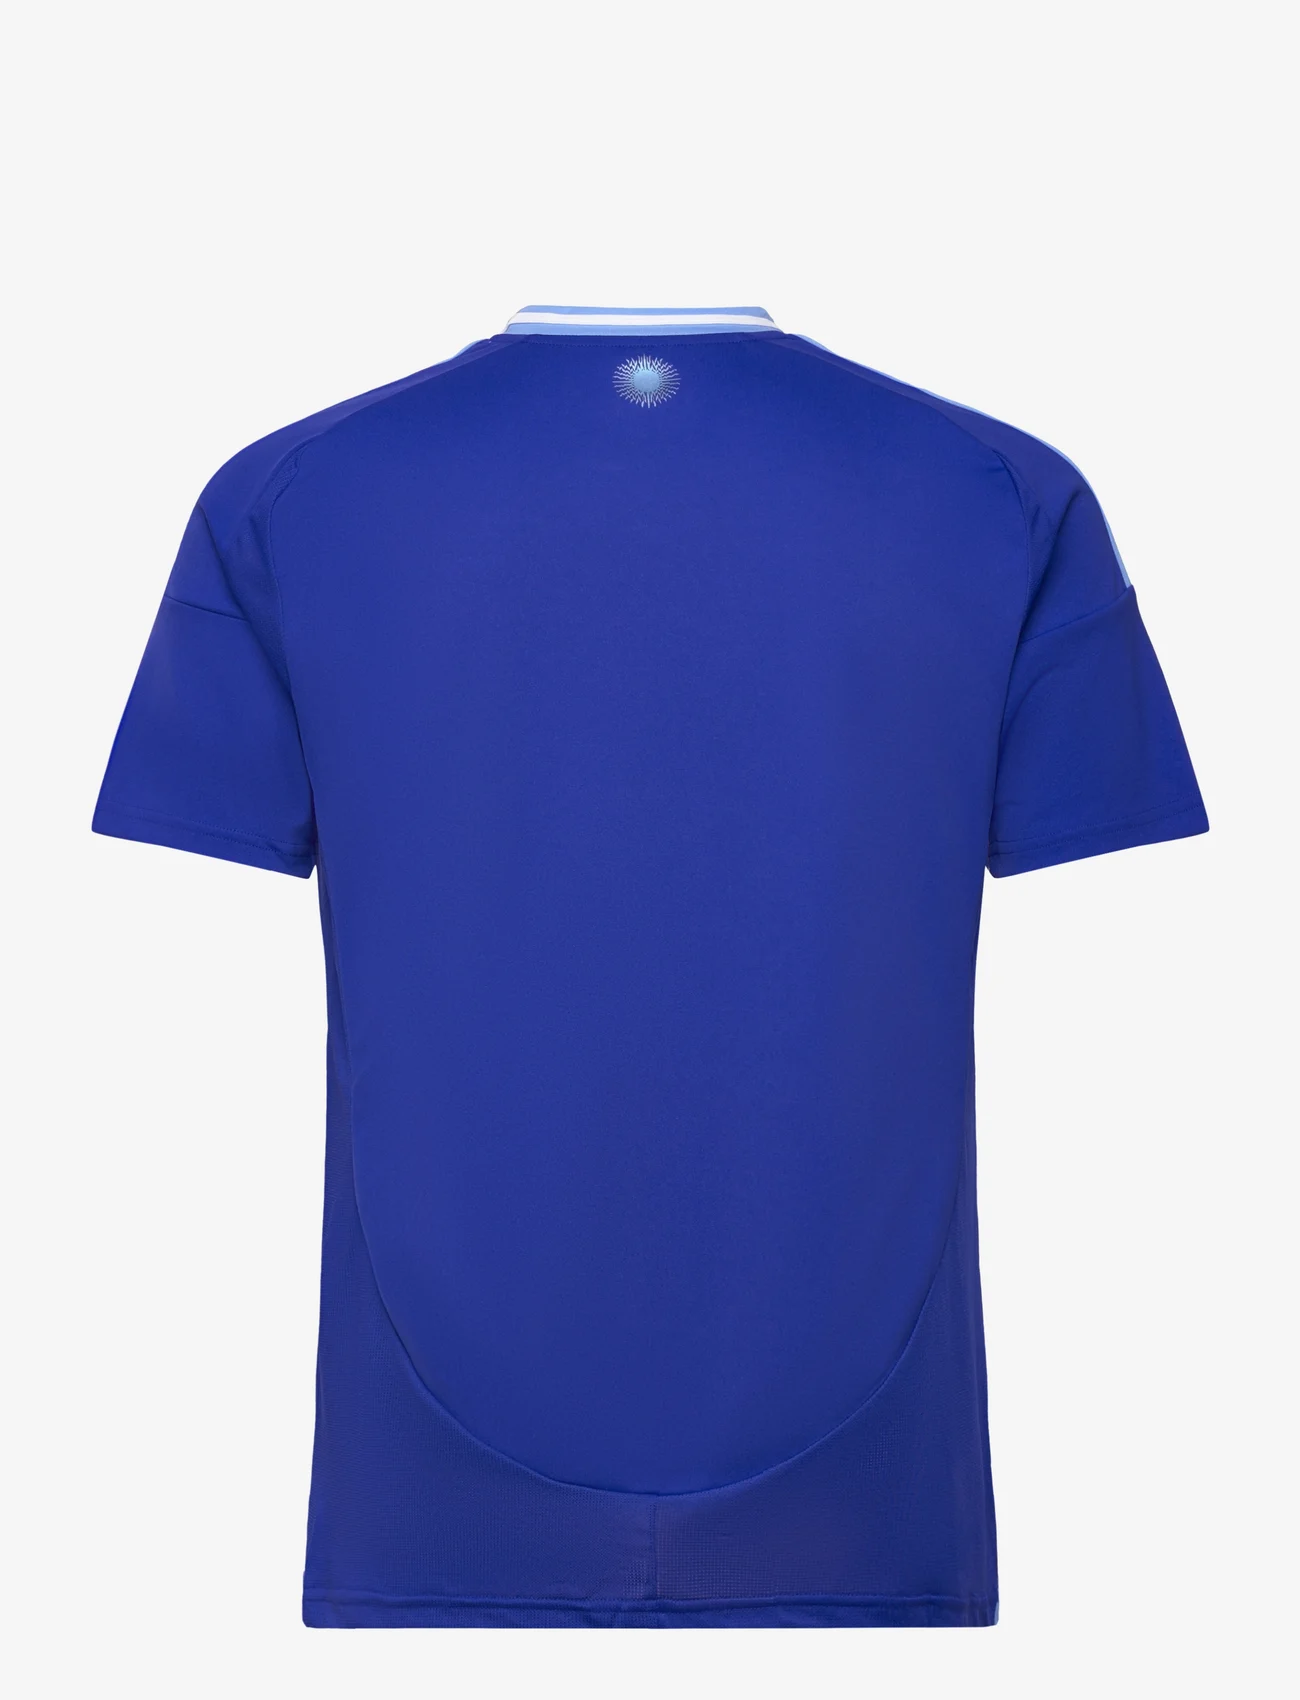 adidas Performance - AFA A JSY D - futbolo marškinėliai - lucblu/blubrs - 1